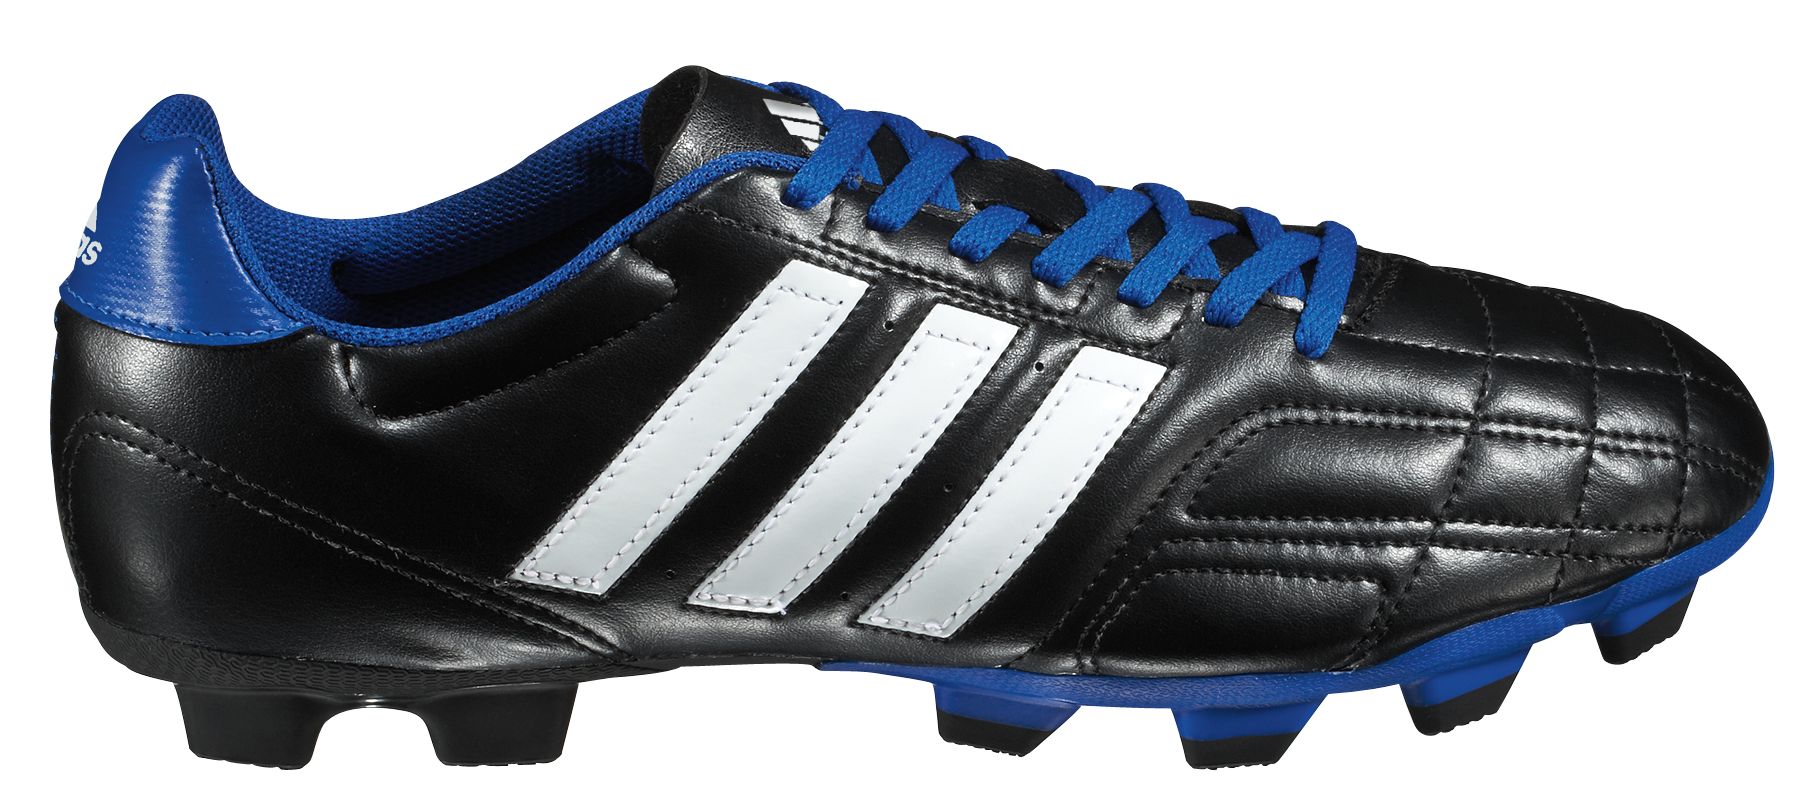 adidas Men's Goletto IV TRX FG Soccer Cleats